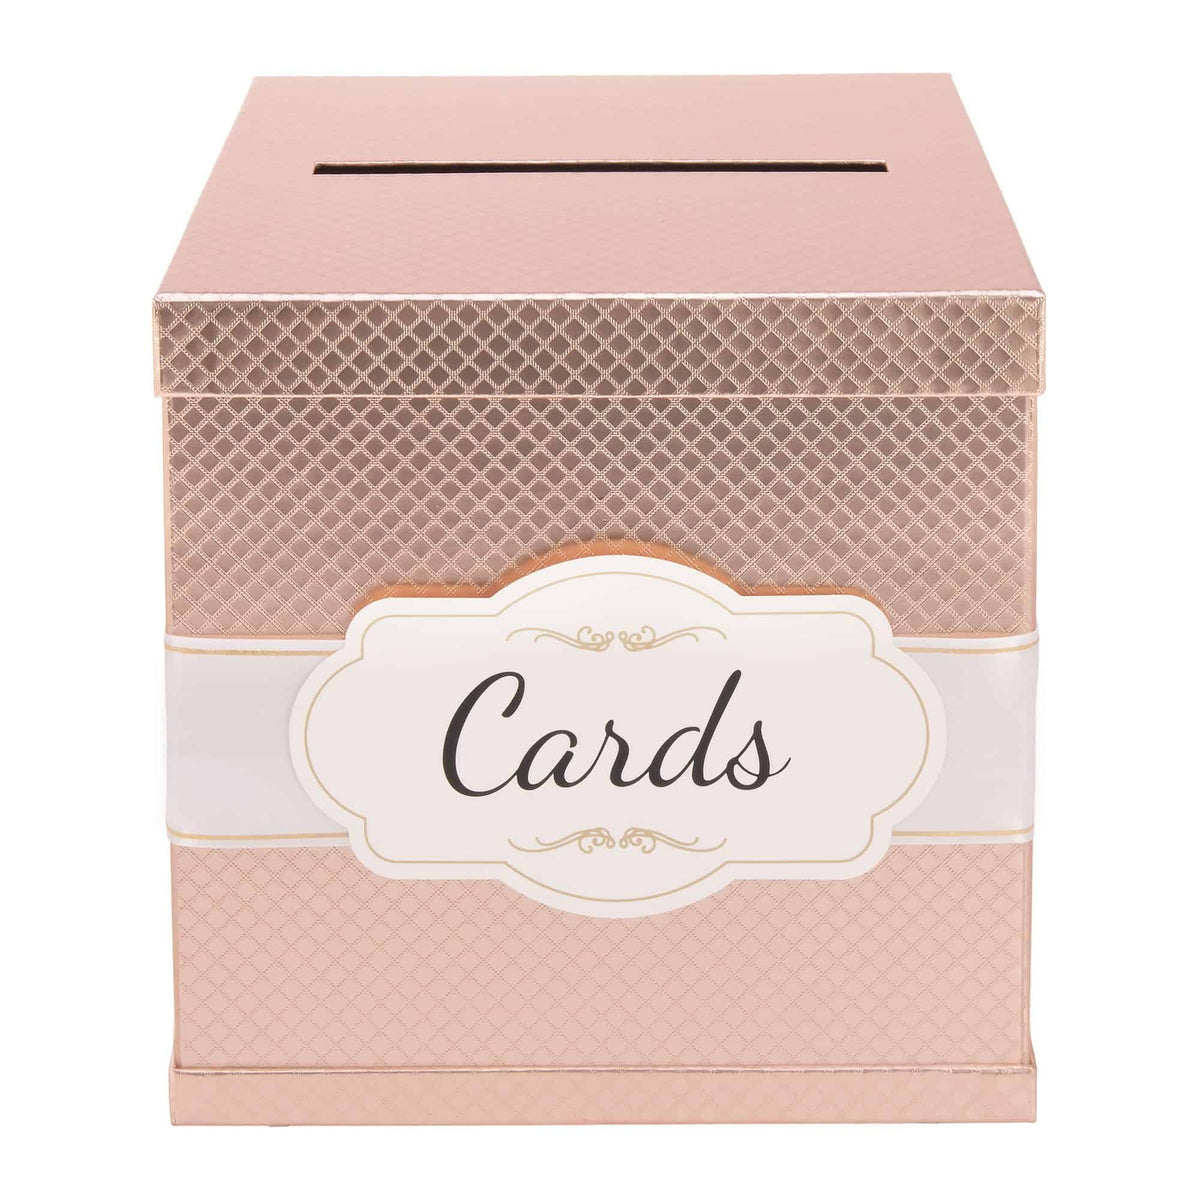 Colored Card Box - Gold, Rose Gold, Burlap, Silver, Black & White